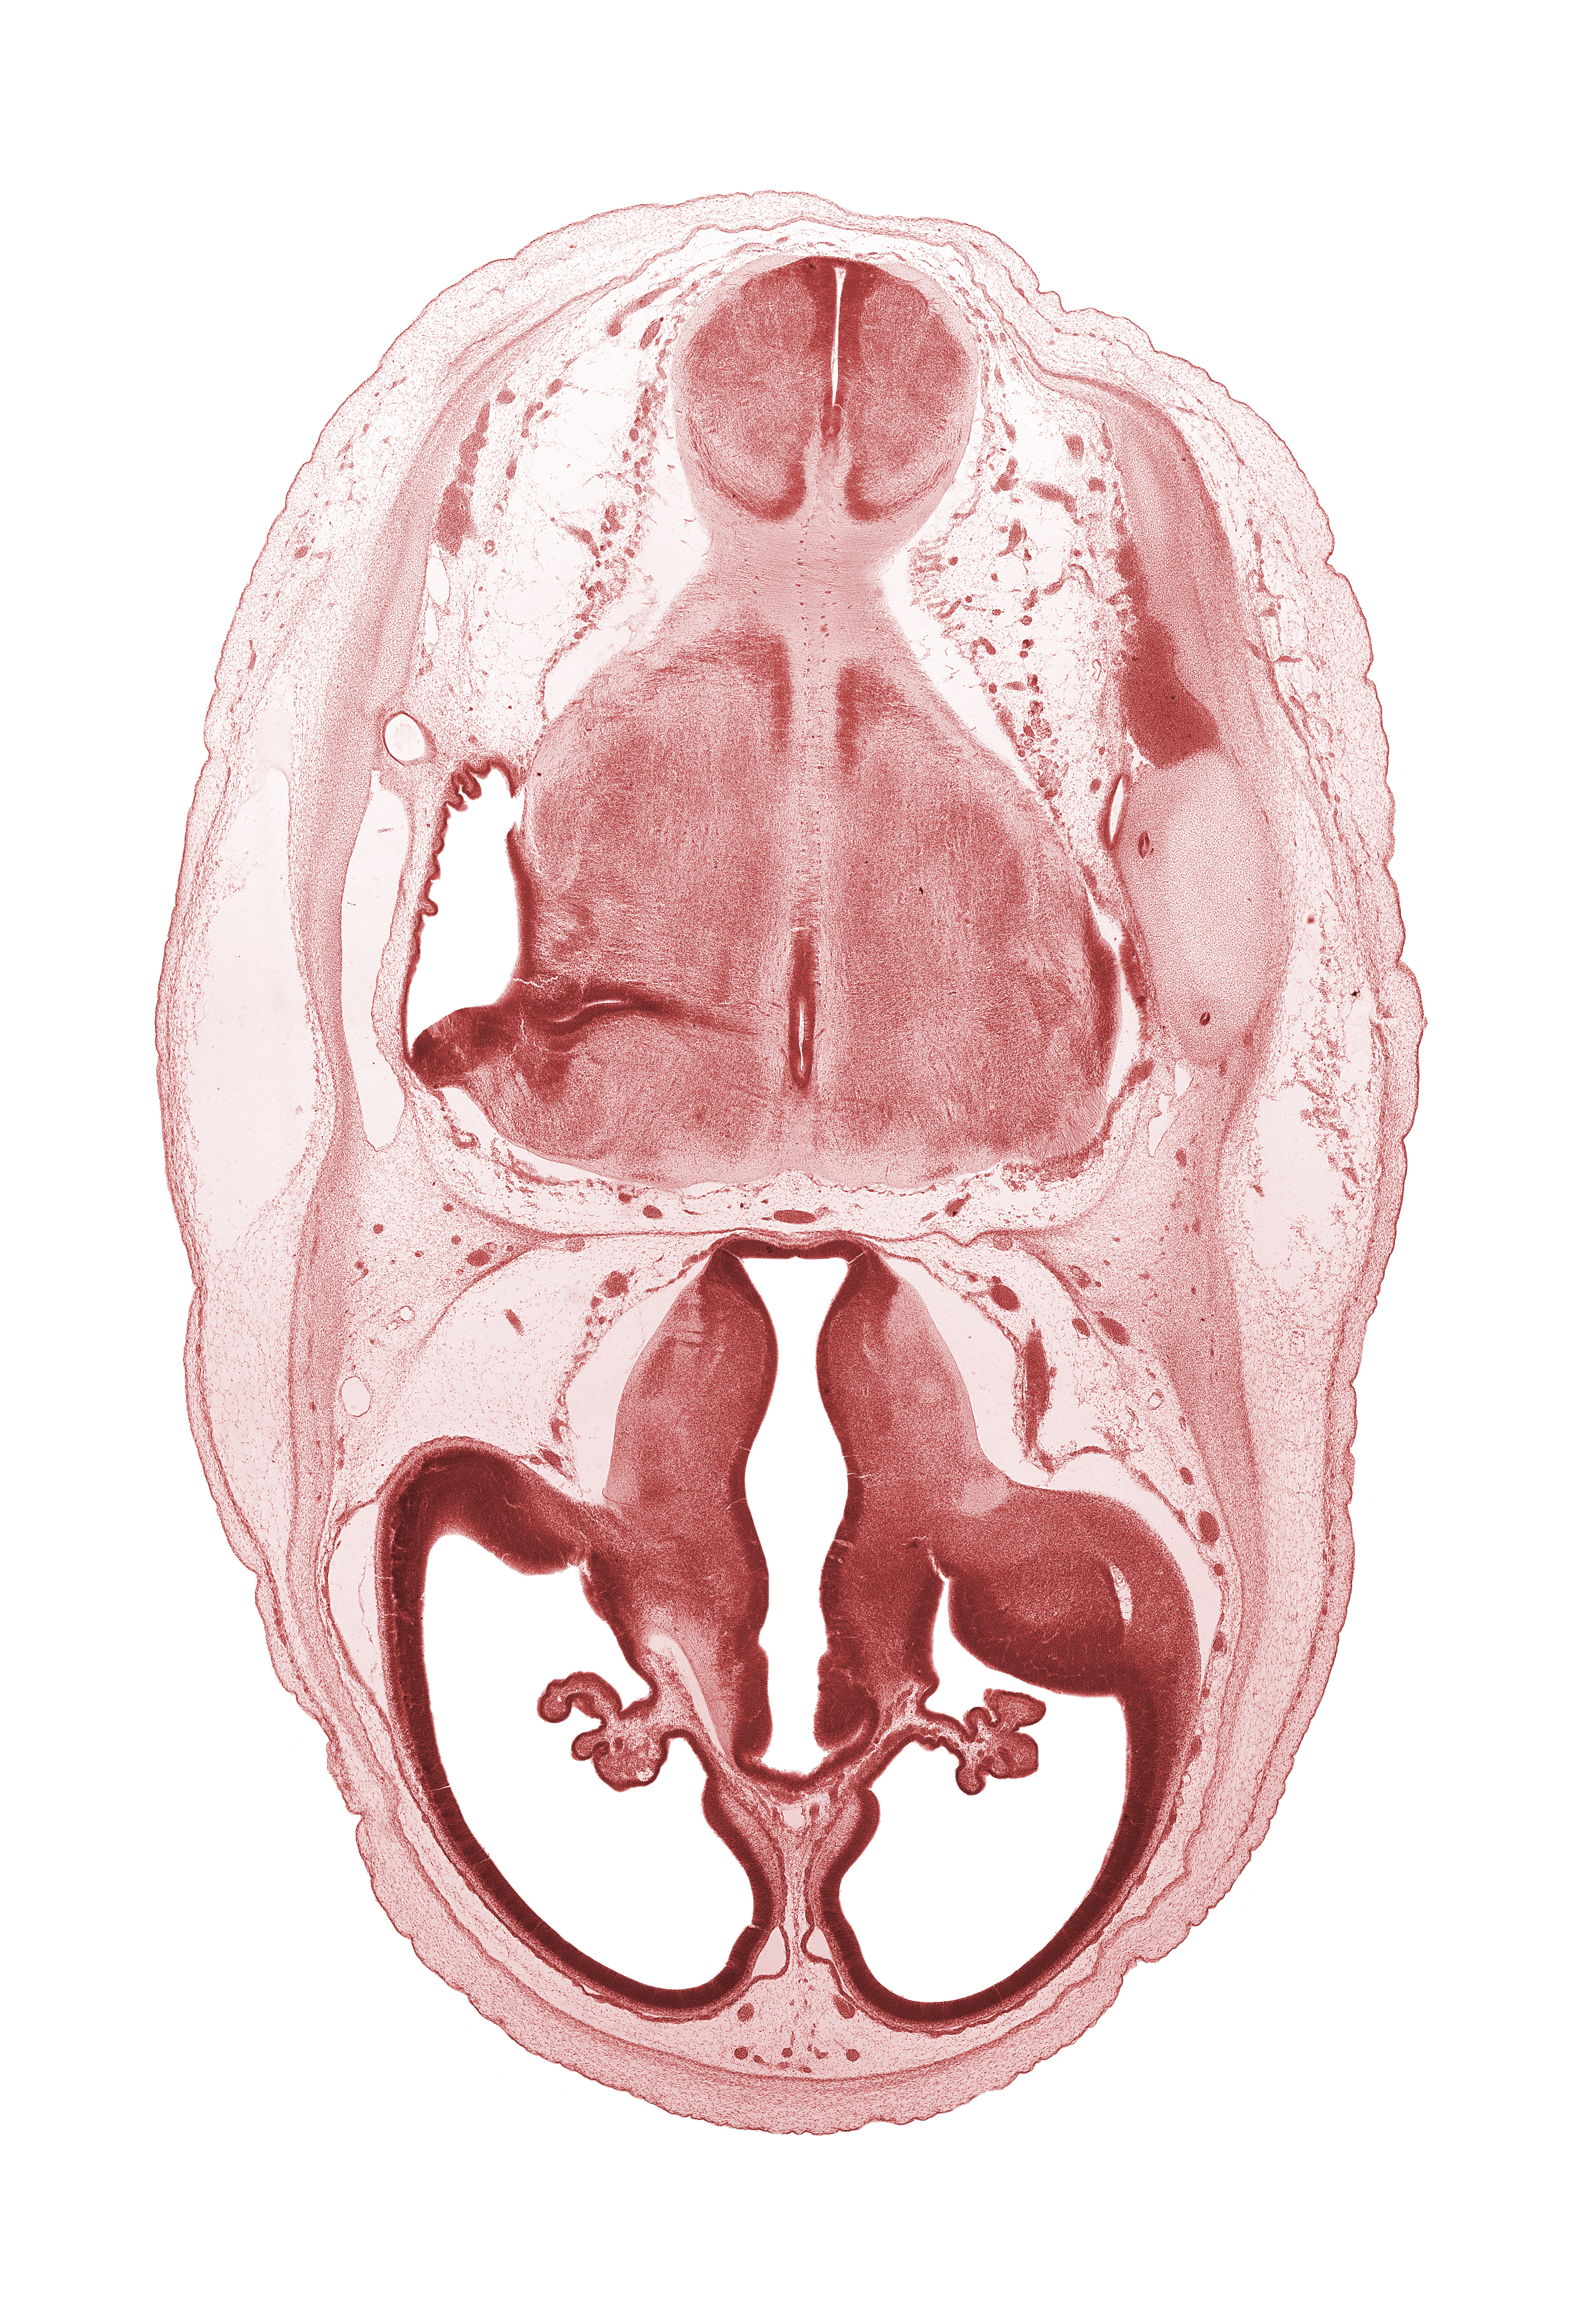 basilar artery, choroid fissure, choroid plexus, dural band for tentorium cerebelli, edge of rhombencoel (fourth ventricle), endolymphatic sac, intermediate zone, lateral ventricle, lateral ventricular eminence (telencephalon), marginal zone, myelencephalon (medulla oblongata), posterior communicating artery, pyramidal tract region, rhombencoel (fourth ventricle), roof of diencephalon, root of trigeminal nerve (CN V), stem of posterior dural venous plexus, third ventricle, ventricular zone